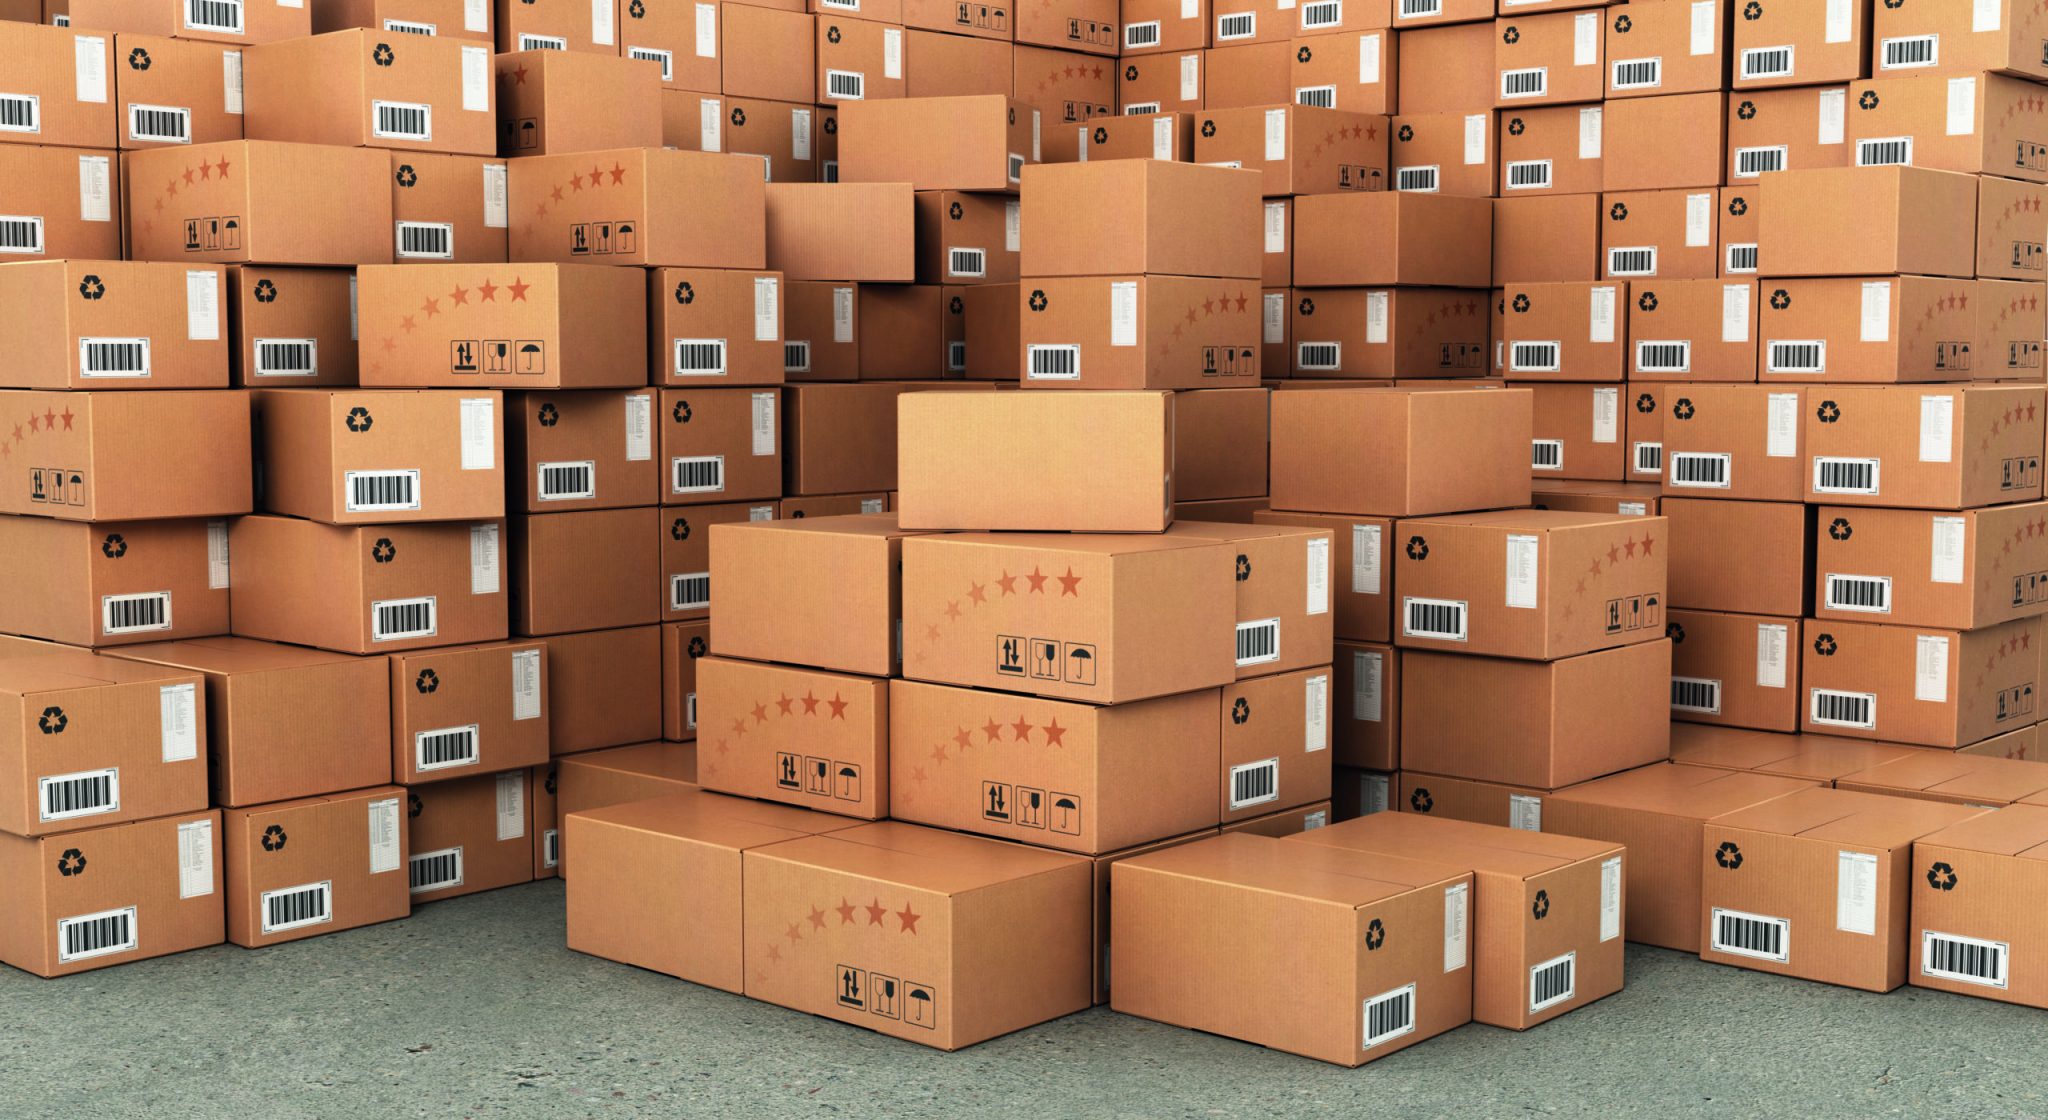 Company package. Картонные коробки склад. Много коробок. Склад с коробками. Куча коробок на складе.